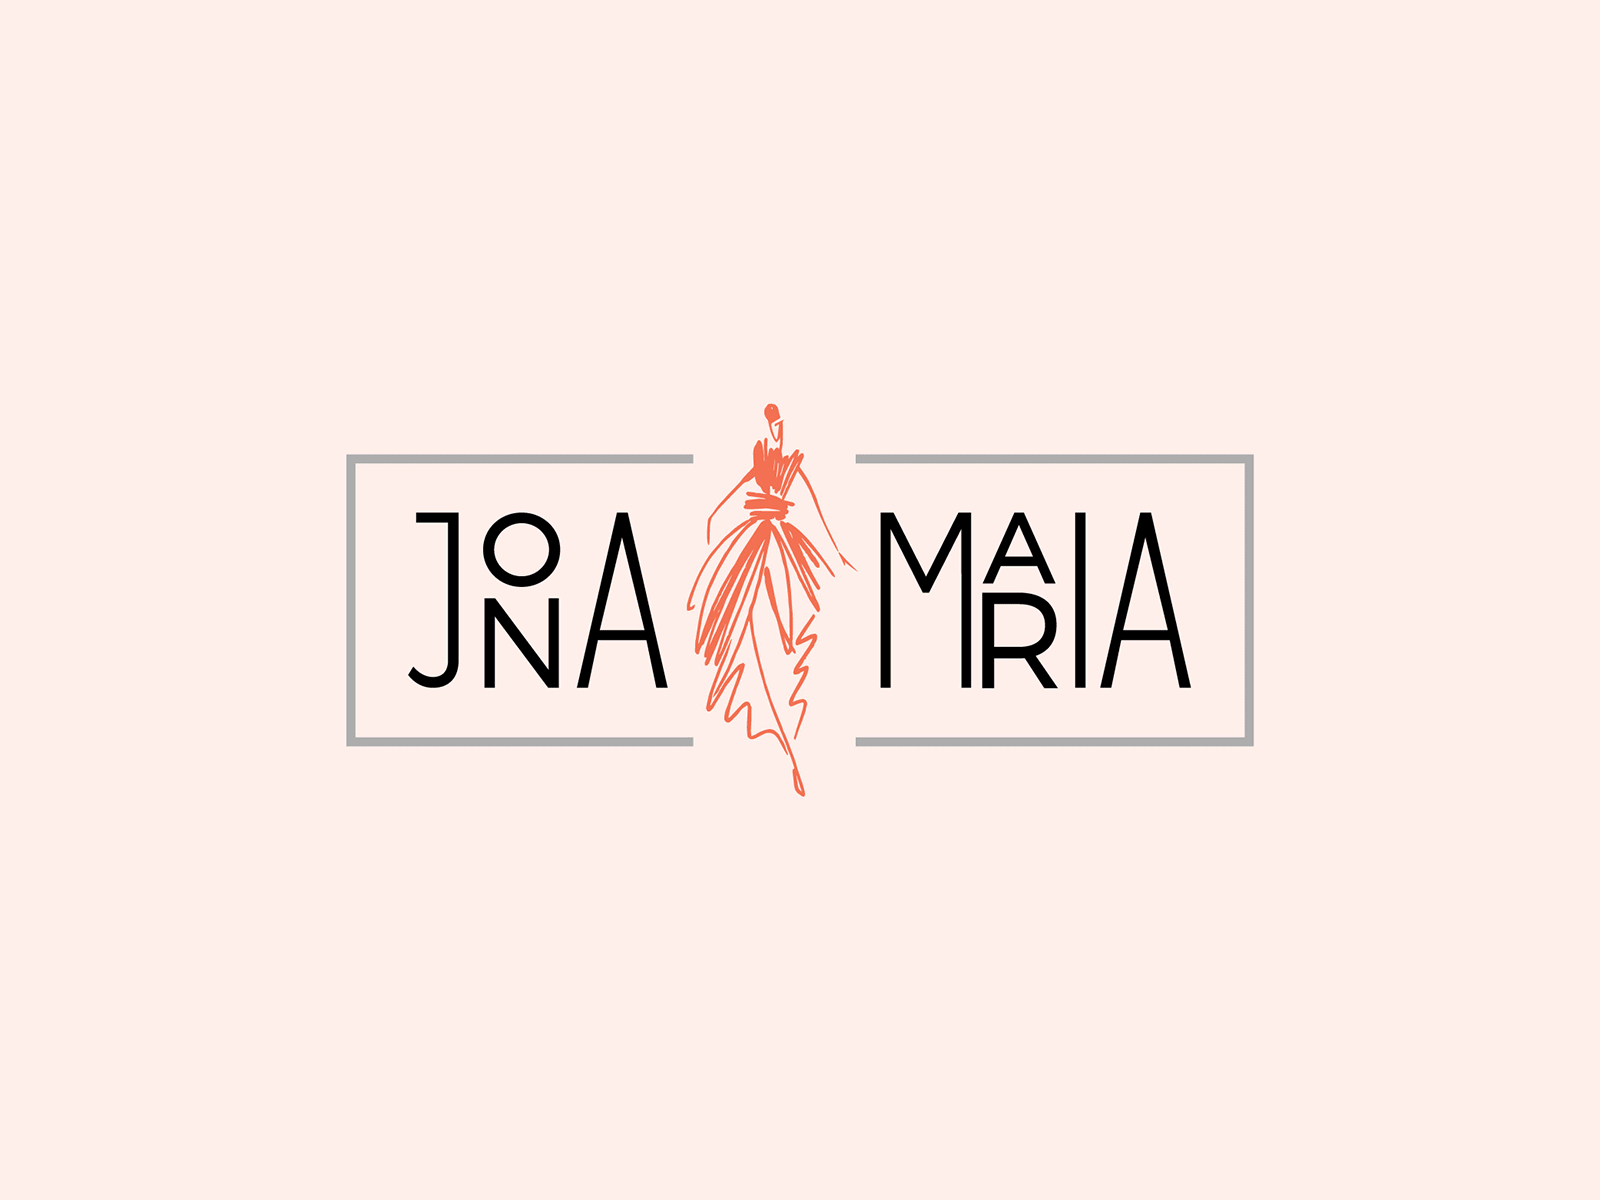 Jona Maria - branding behance branding branding concept chennai design fashion app fashion brand logo graphic design identity design illustration logo logotype typography vector women empowerment women fashion